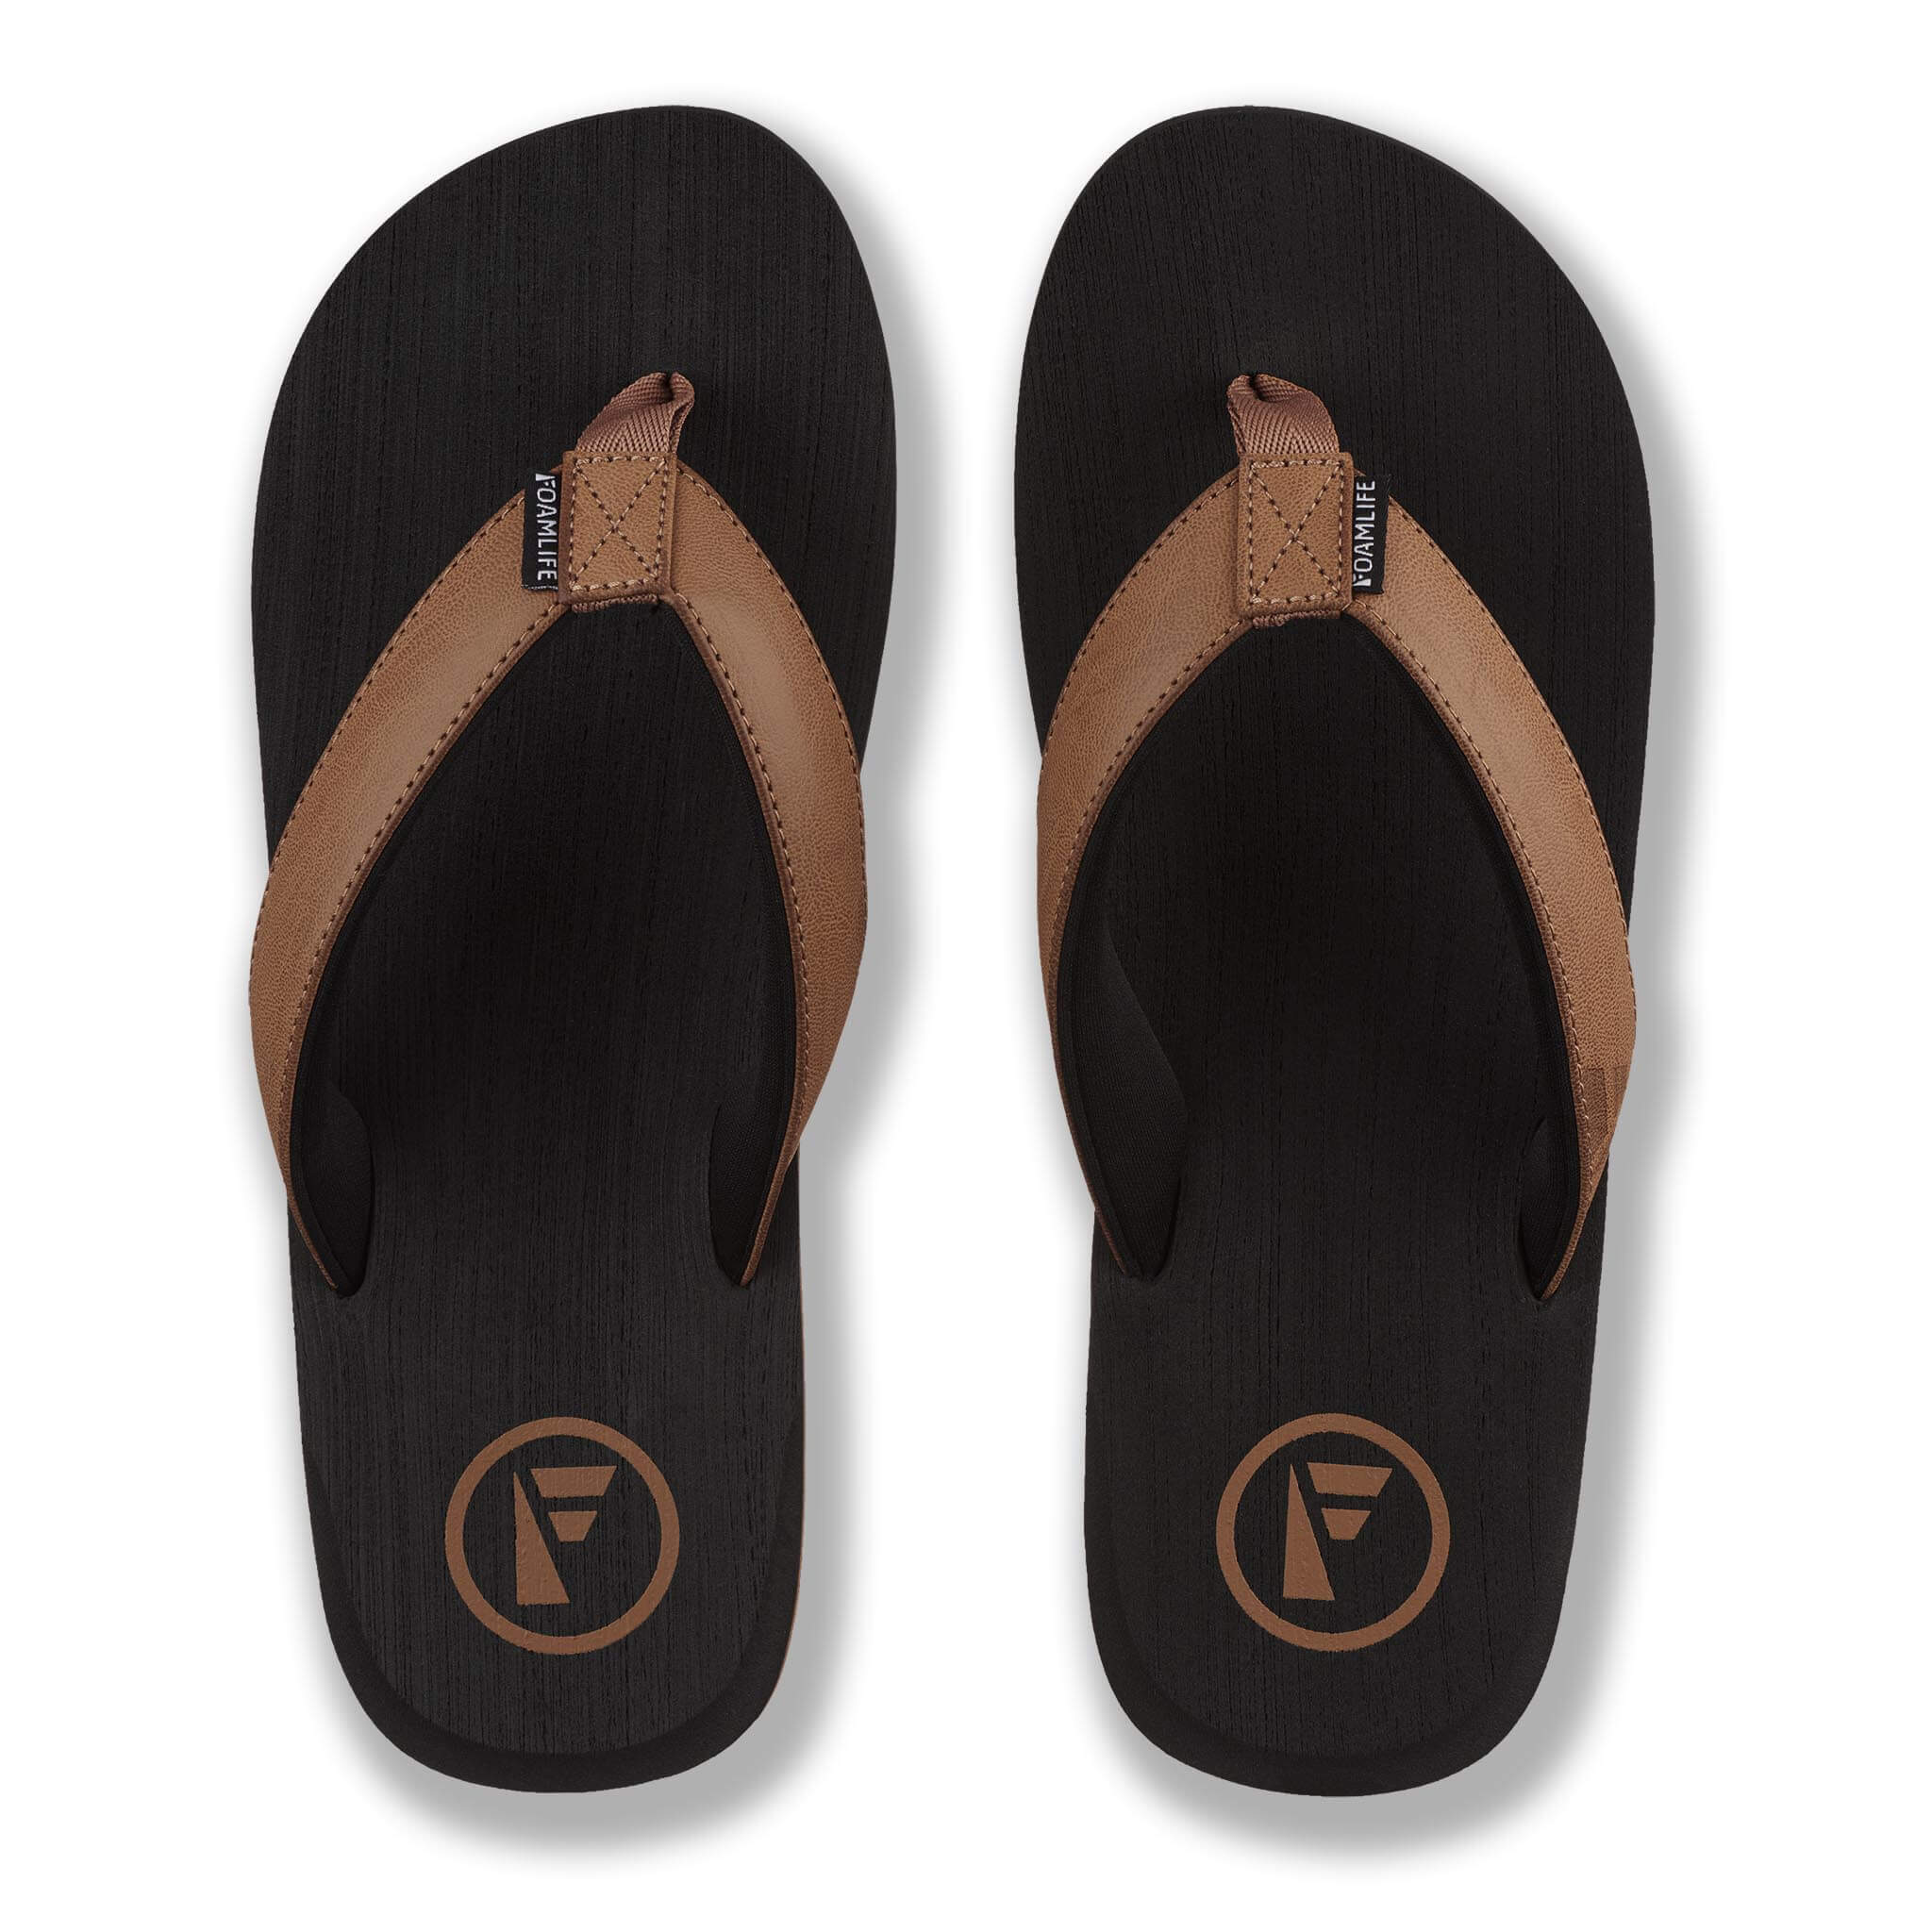 We’re giving away 10 pairs of FoamLife flip flops - Carvemag.com